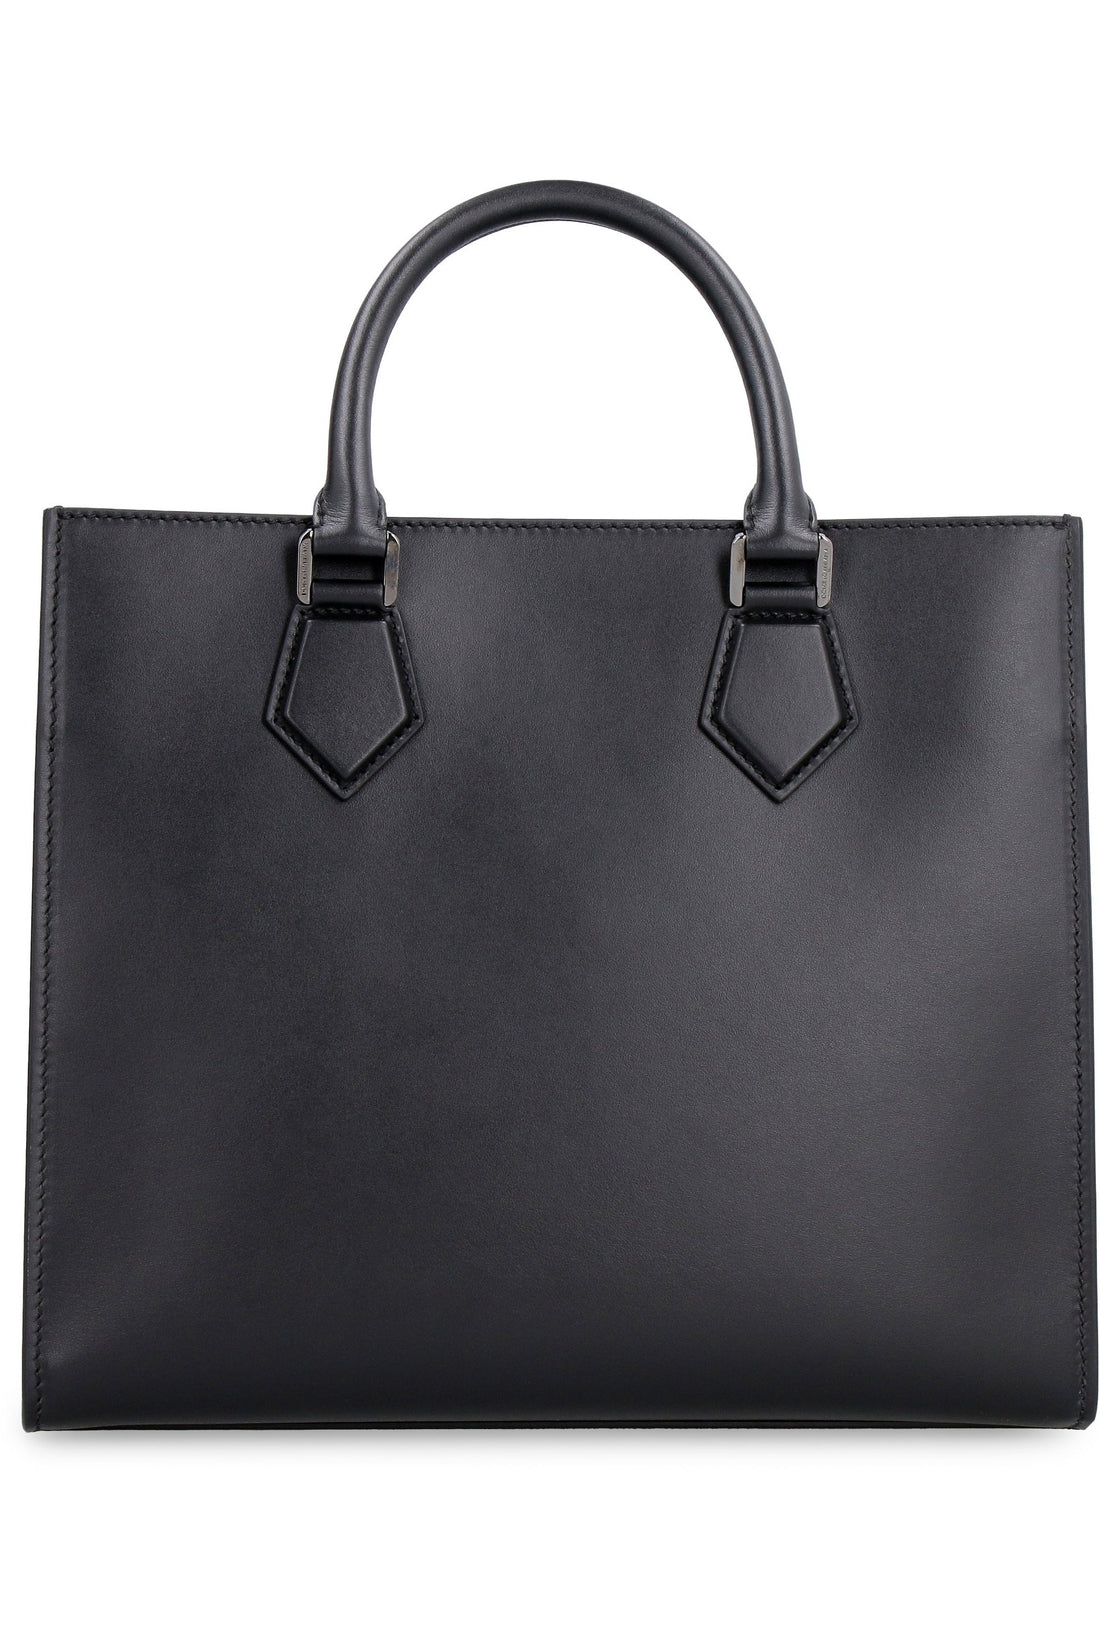 Dolce & Gabbana-OUTLET-SALE-Edge leather bag-ARCHIVIST